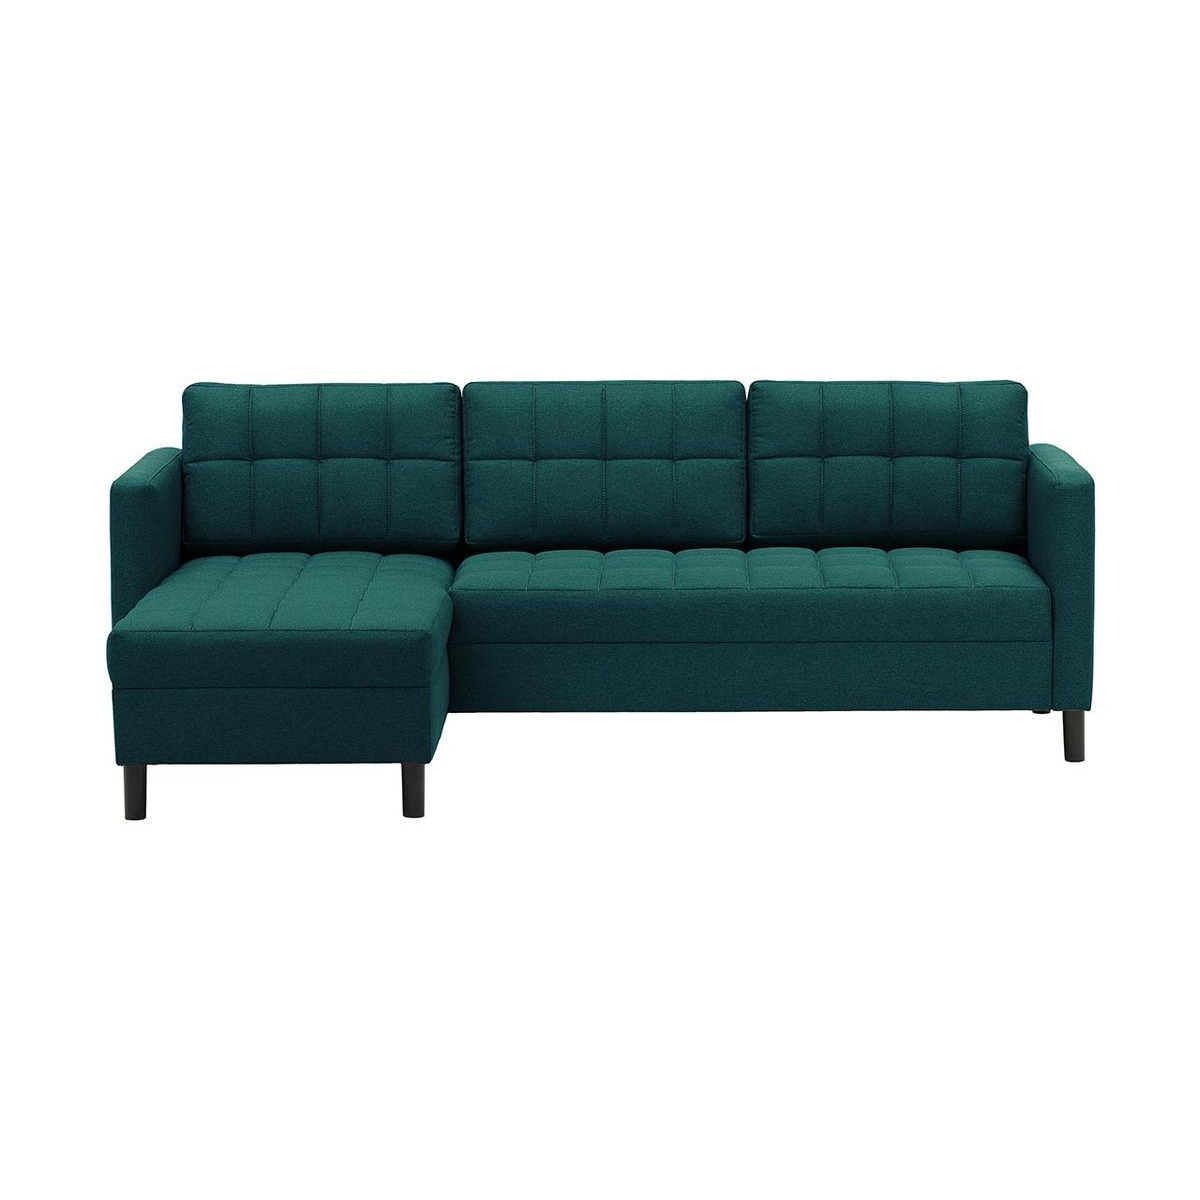 Ludo Universal Corner Sofa, blue - image 1